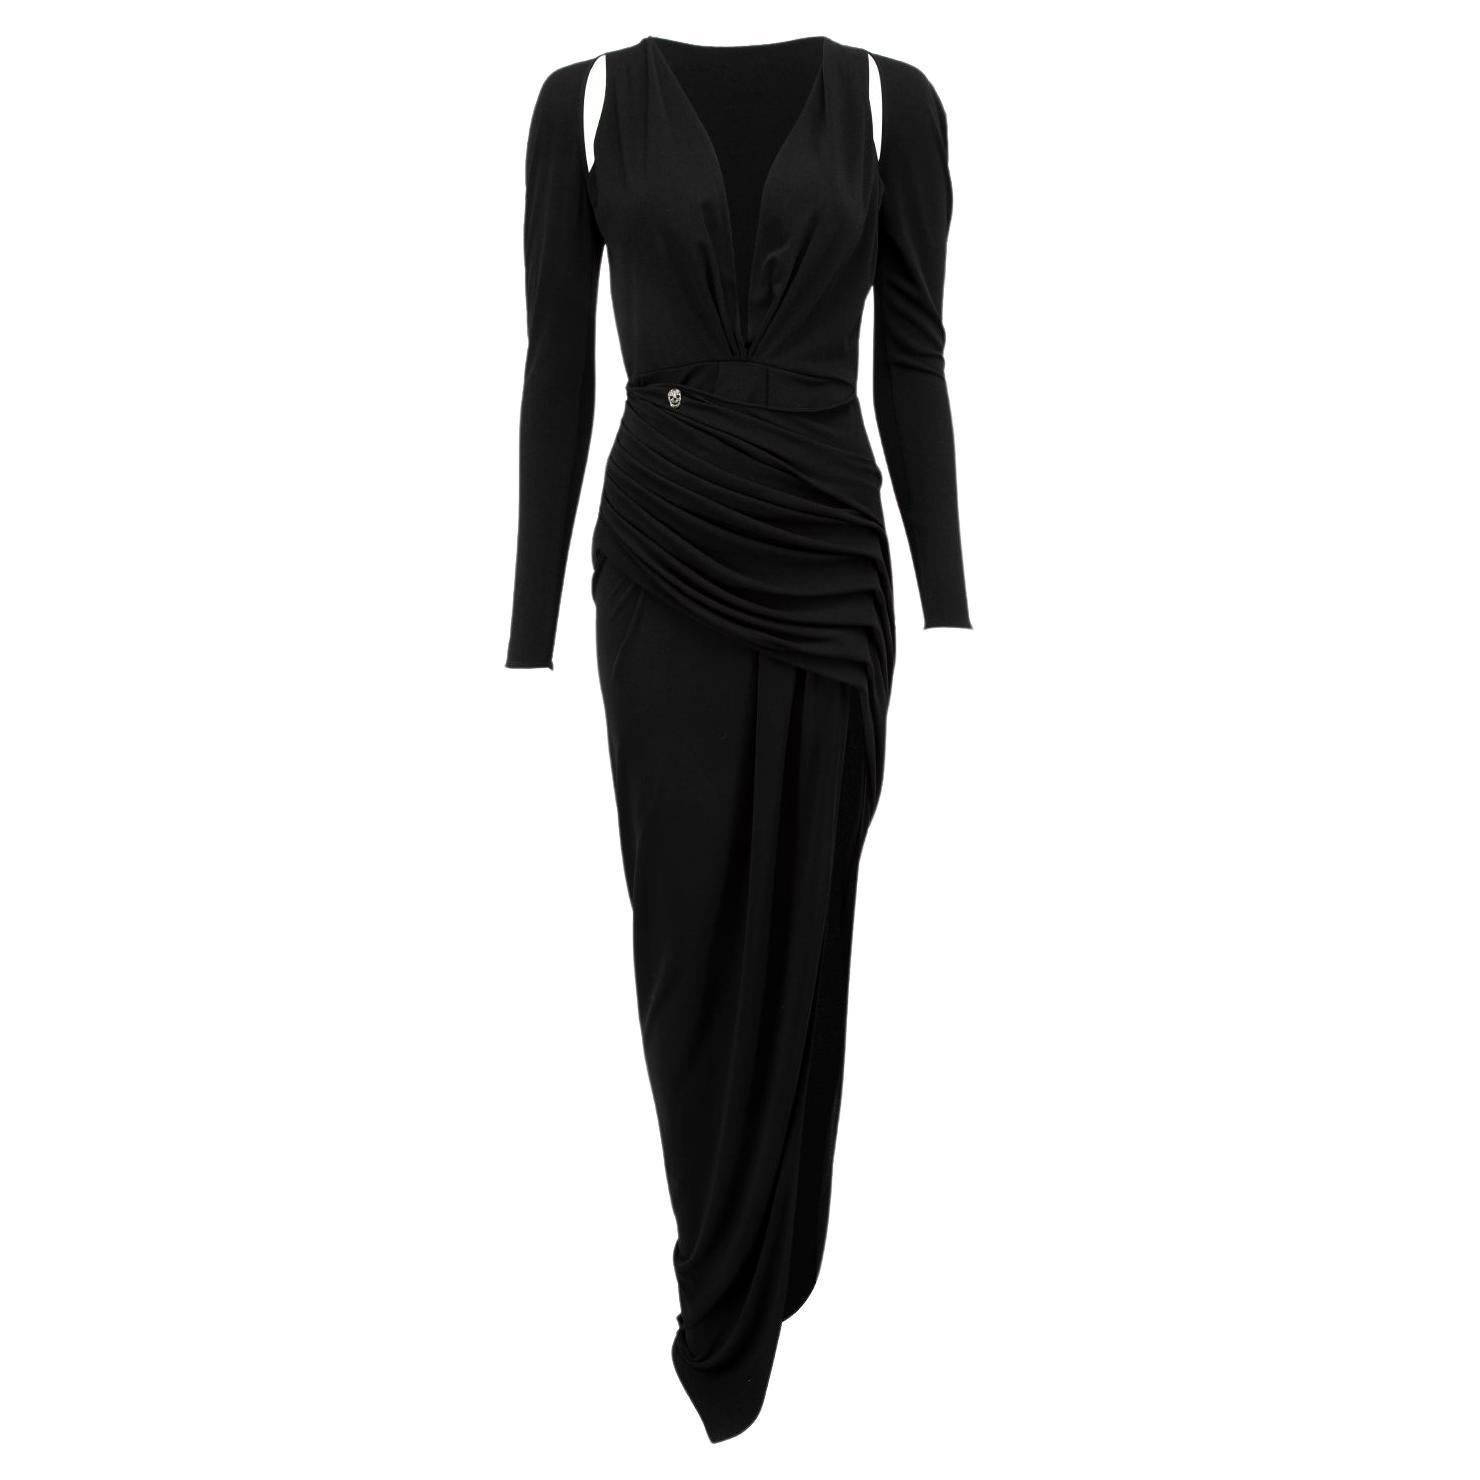 Pre-Loved Philipp Plein Women's Black Cold Shoulder Deep V Ruched Gown For Sale